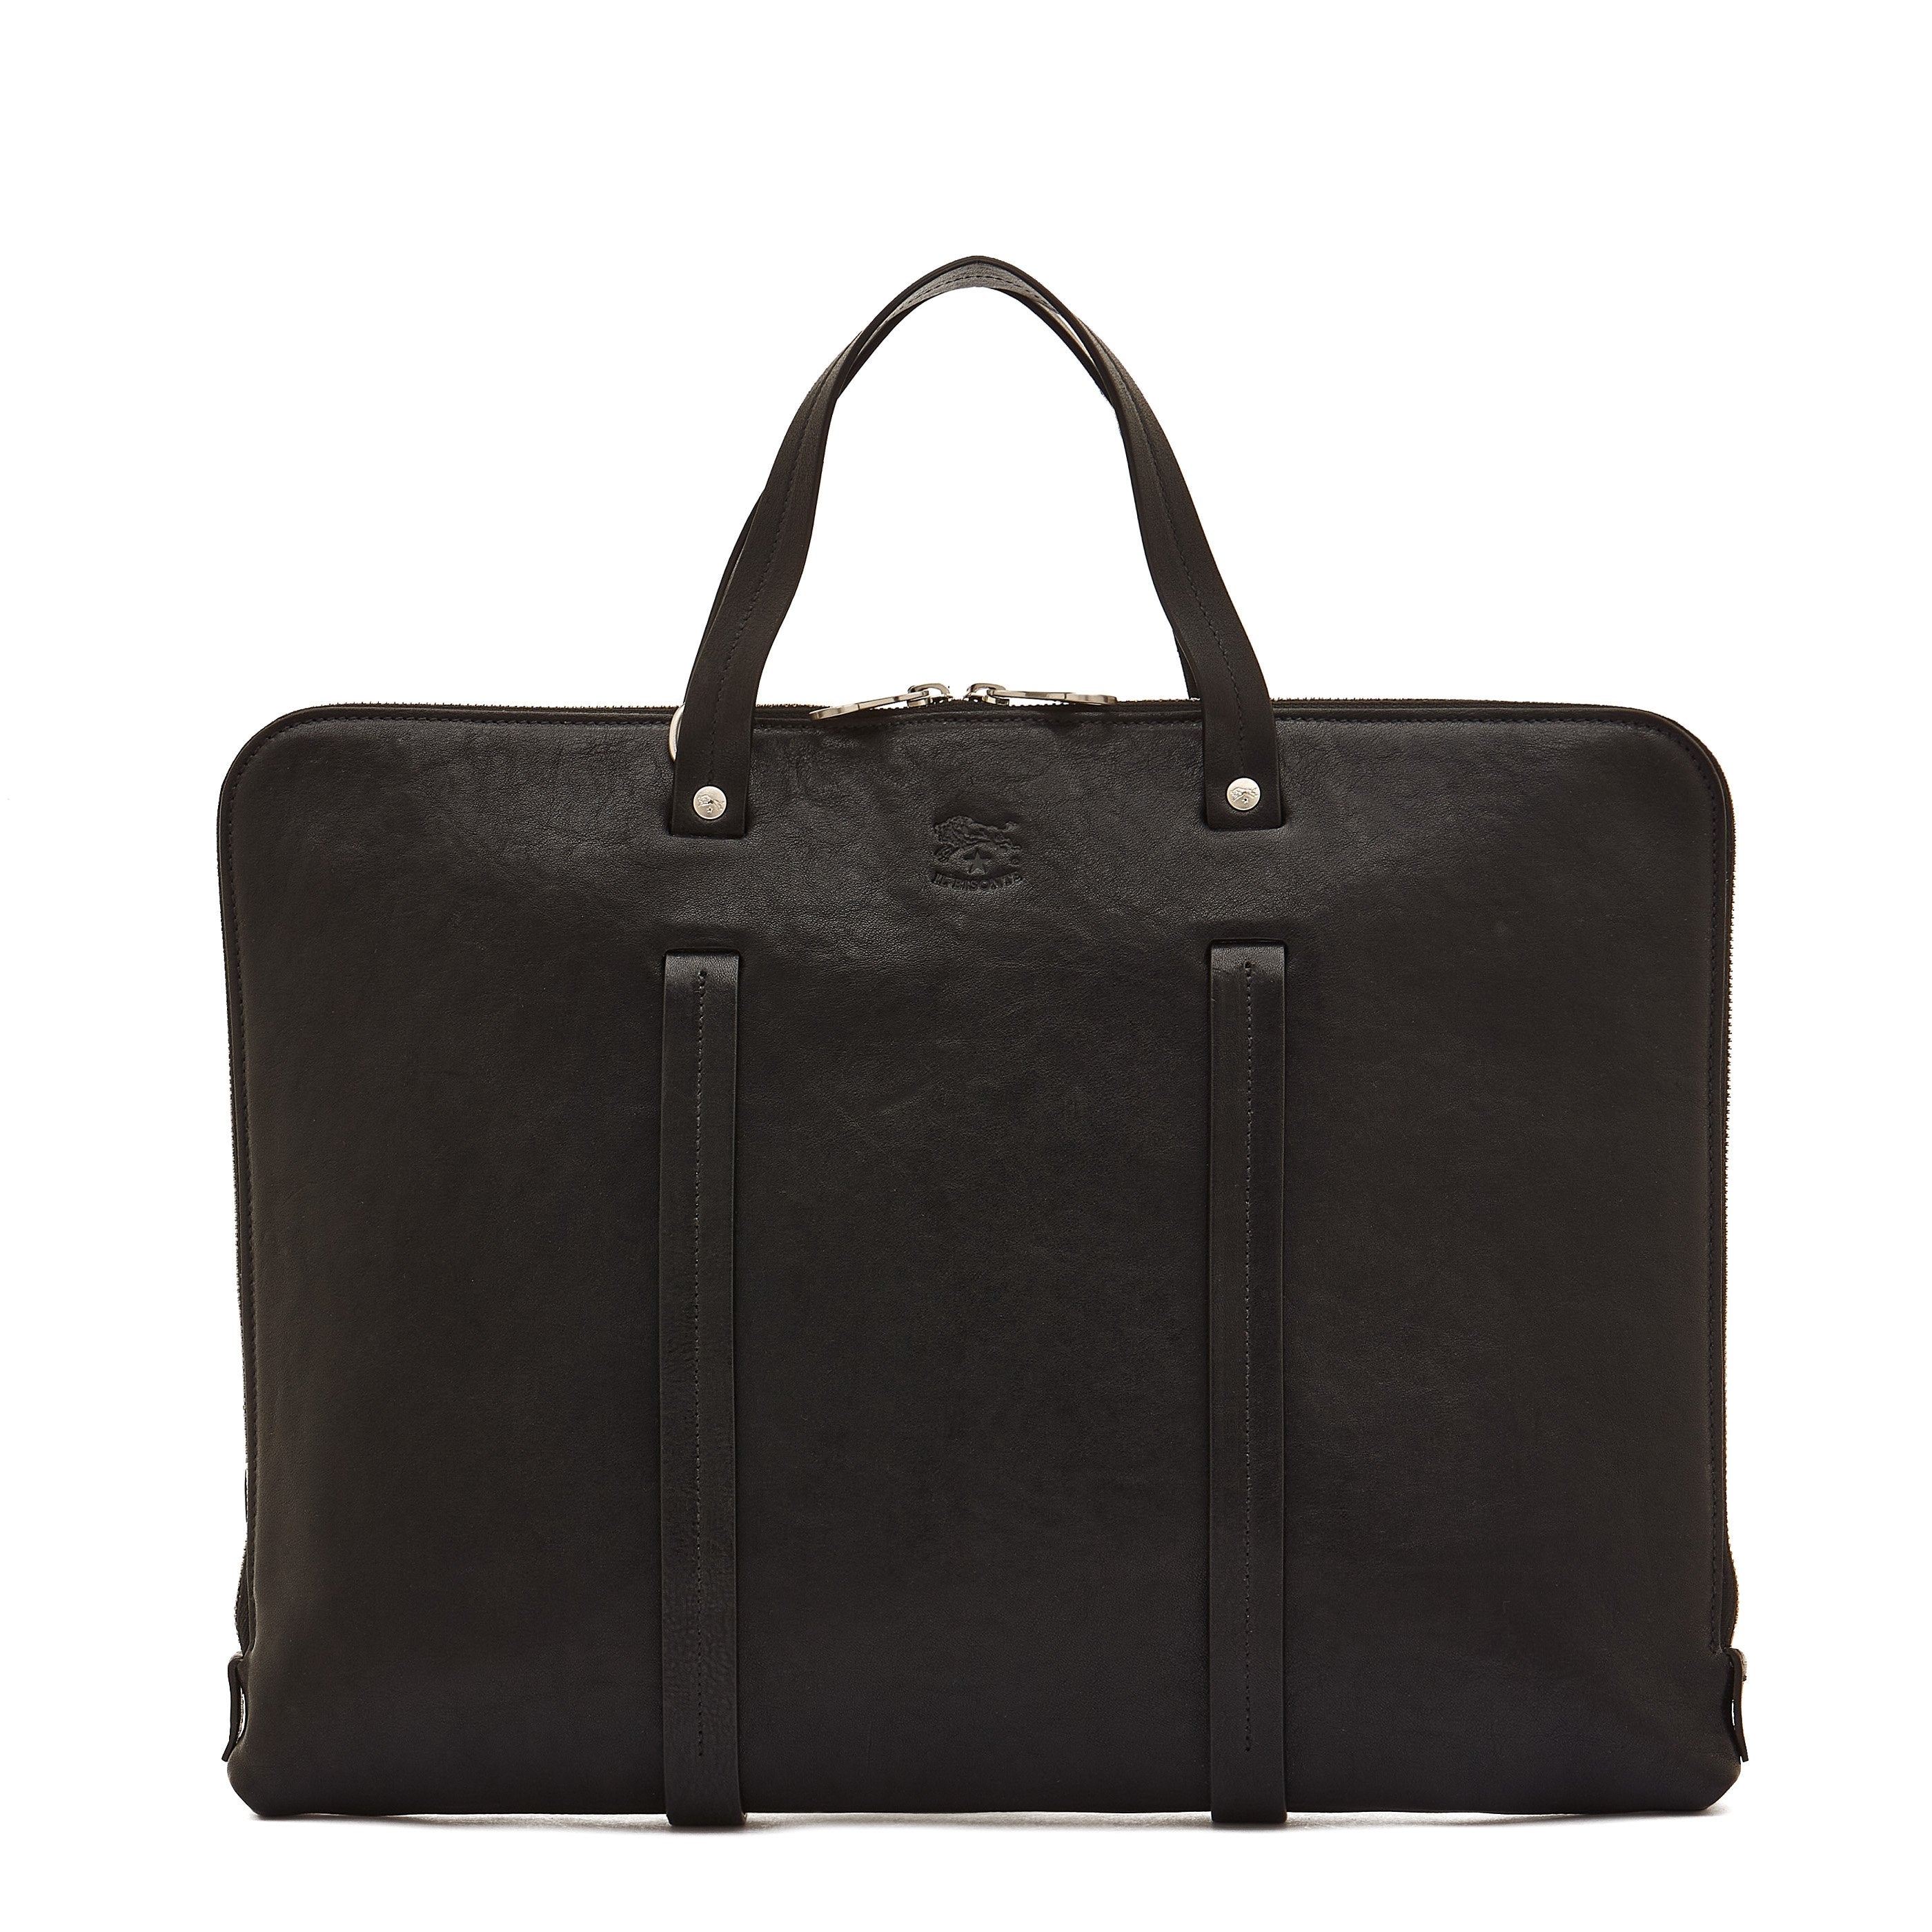 Vintage LV briefcase as laptop bag?